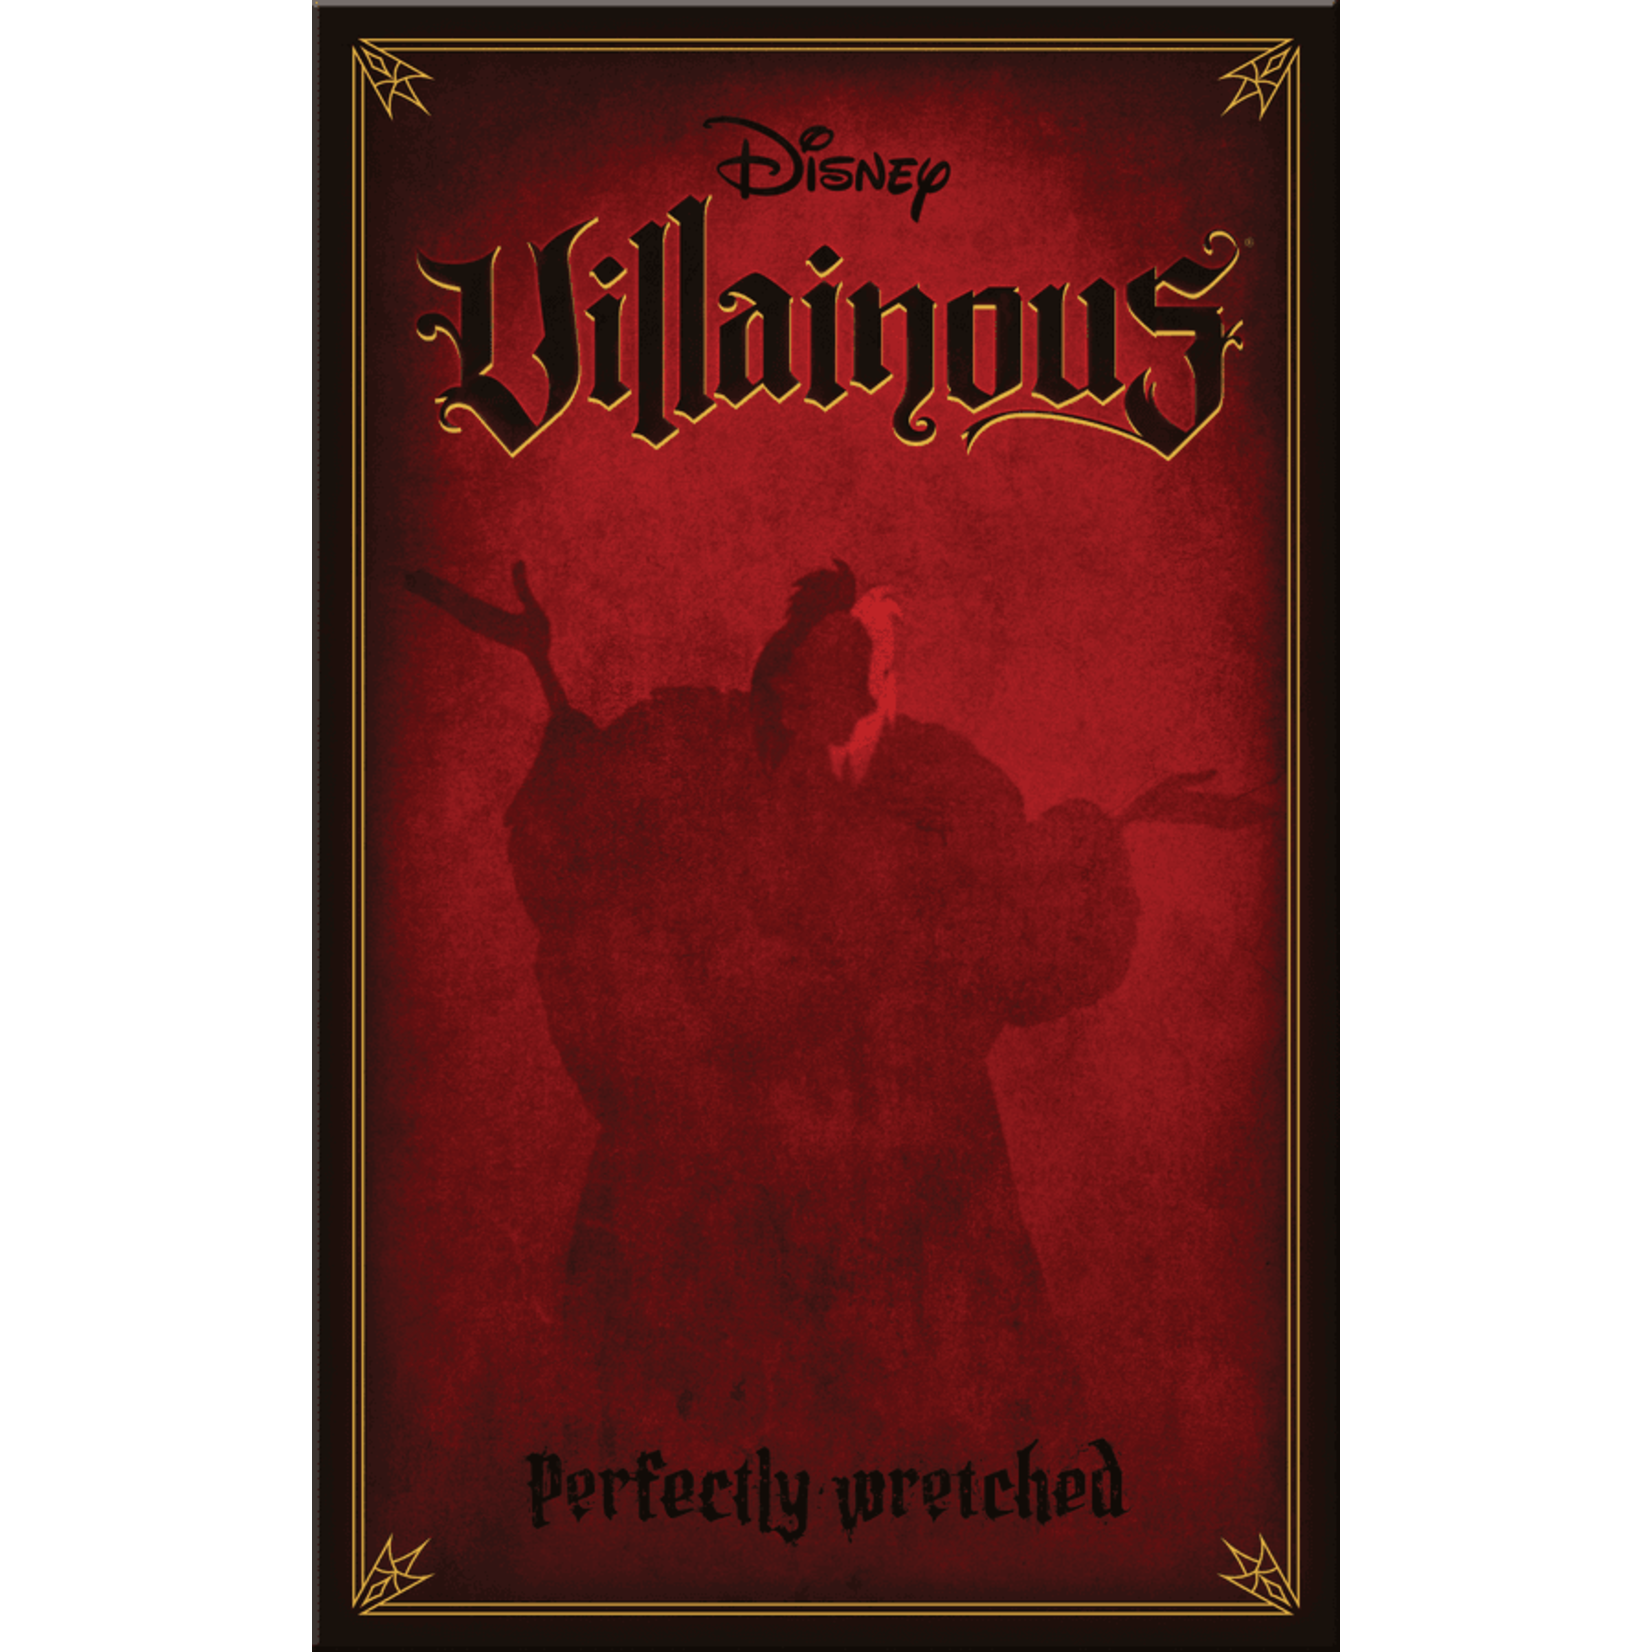 Ravensburger Villainous: Disney - Perfectly Wretched